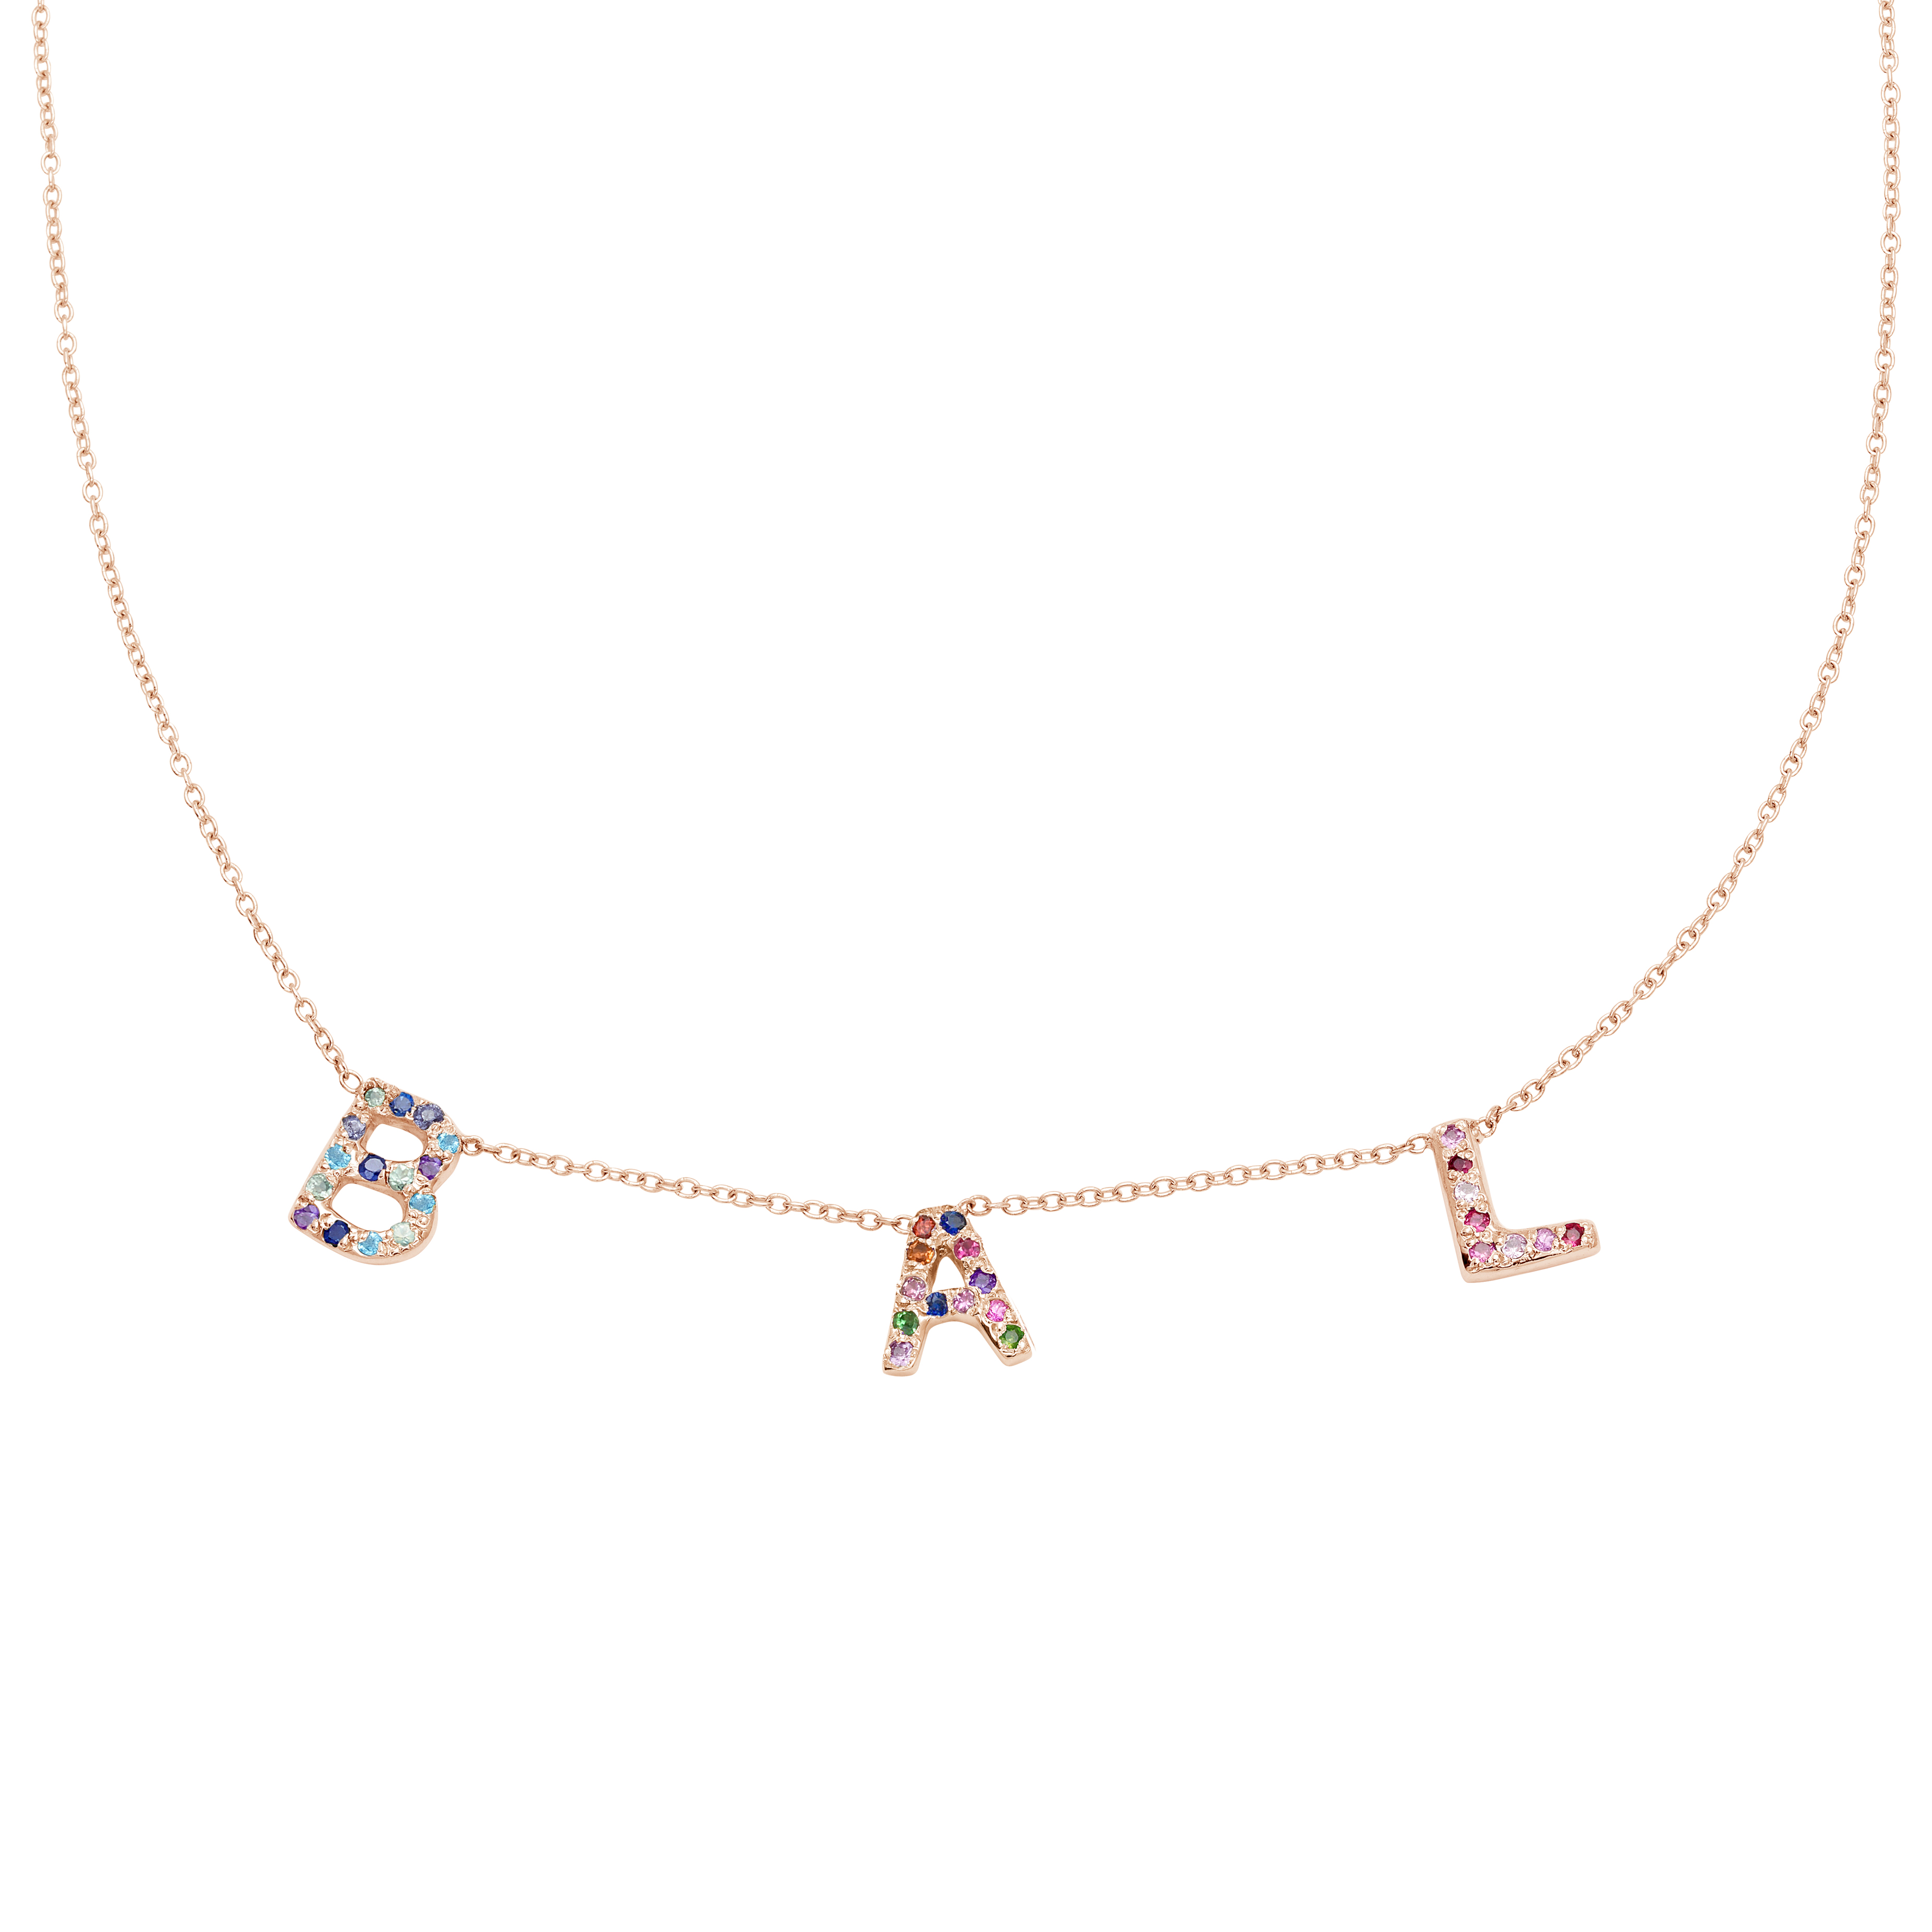 3 Letter Necklace in 14k Pink Gold